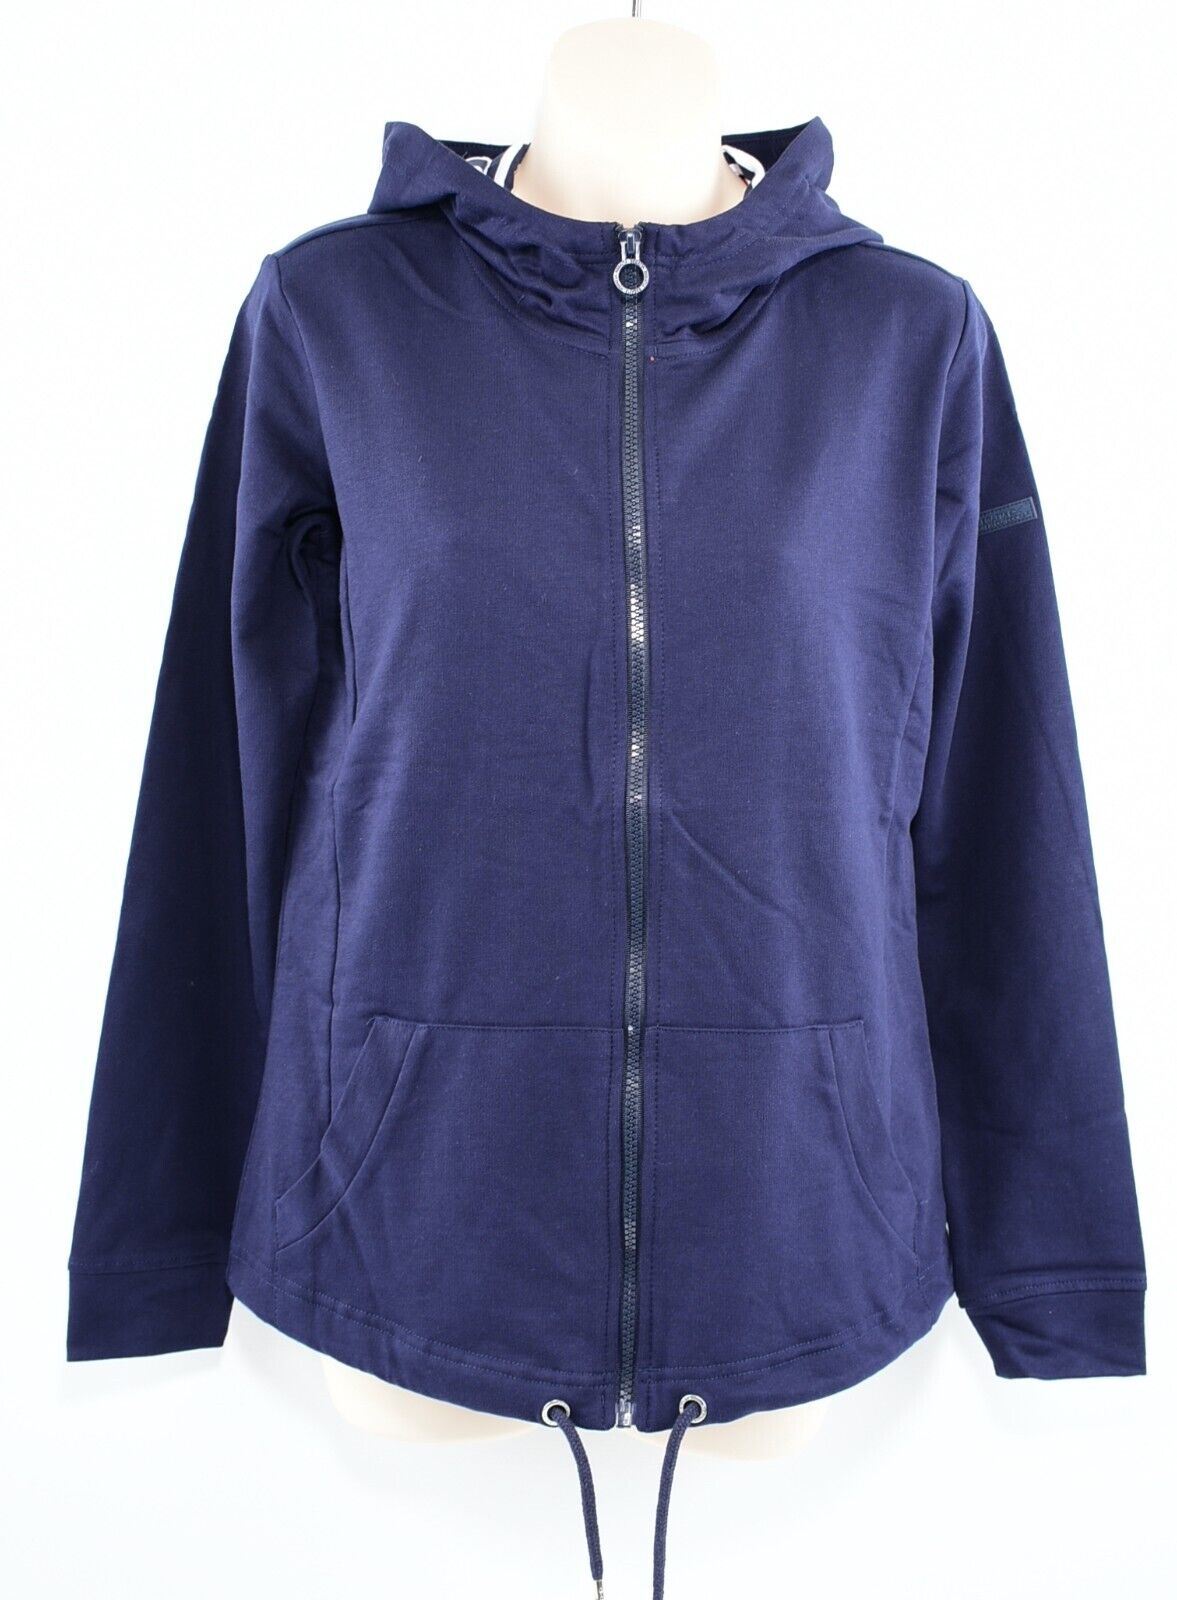 REGATTA Womens BAYARMA Zip Hoodie Jacket, Navy Blue, size M /UK 12